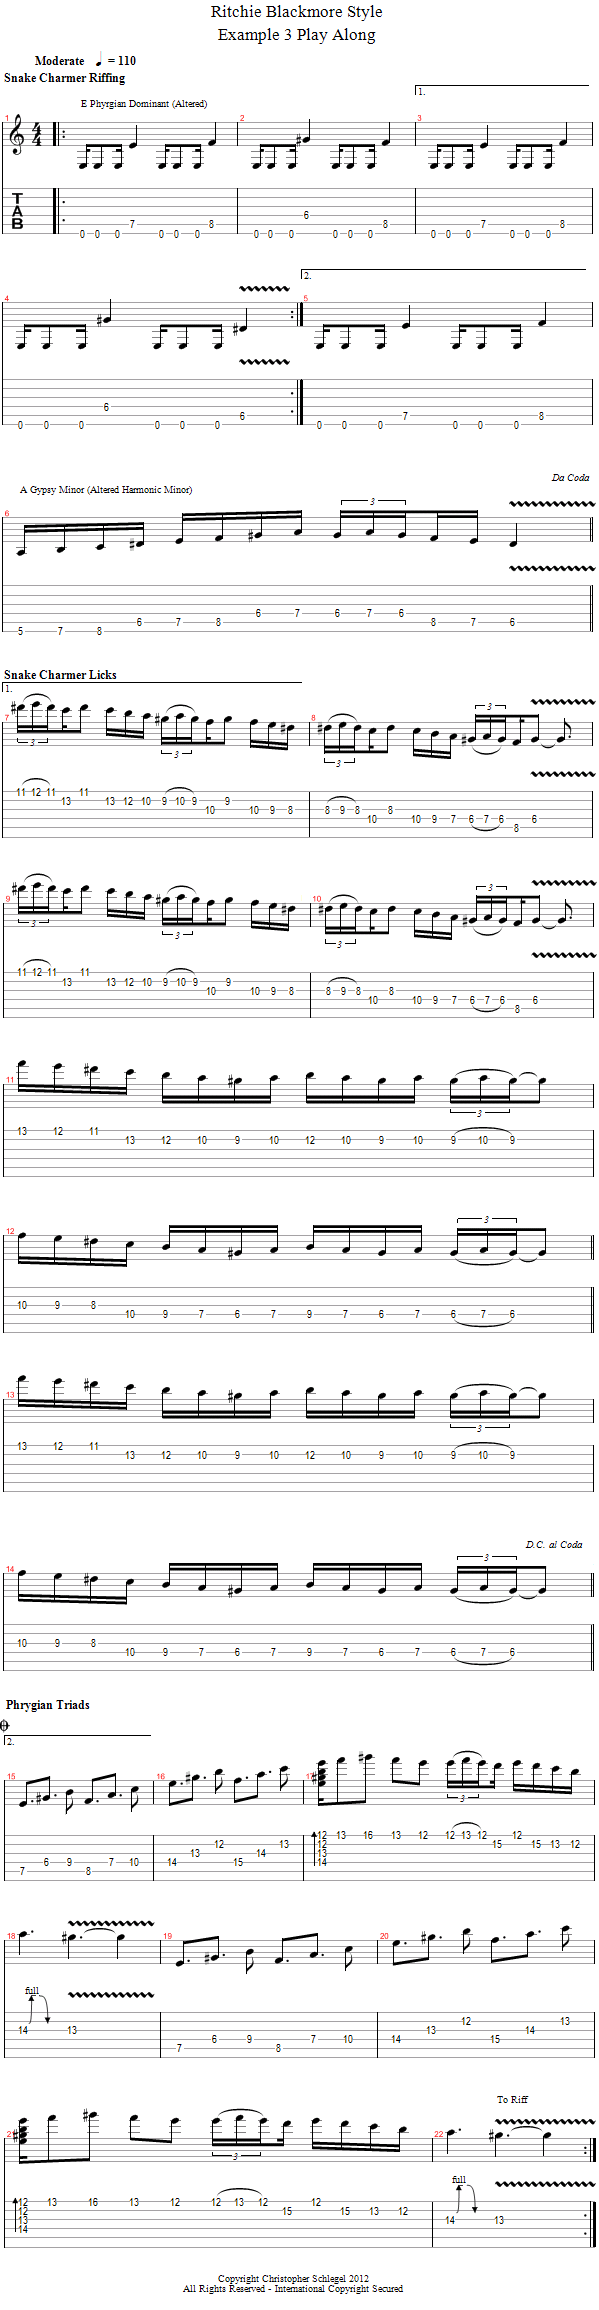 Blackmore Example 3 Play Along song notation